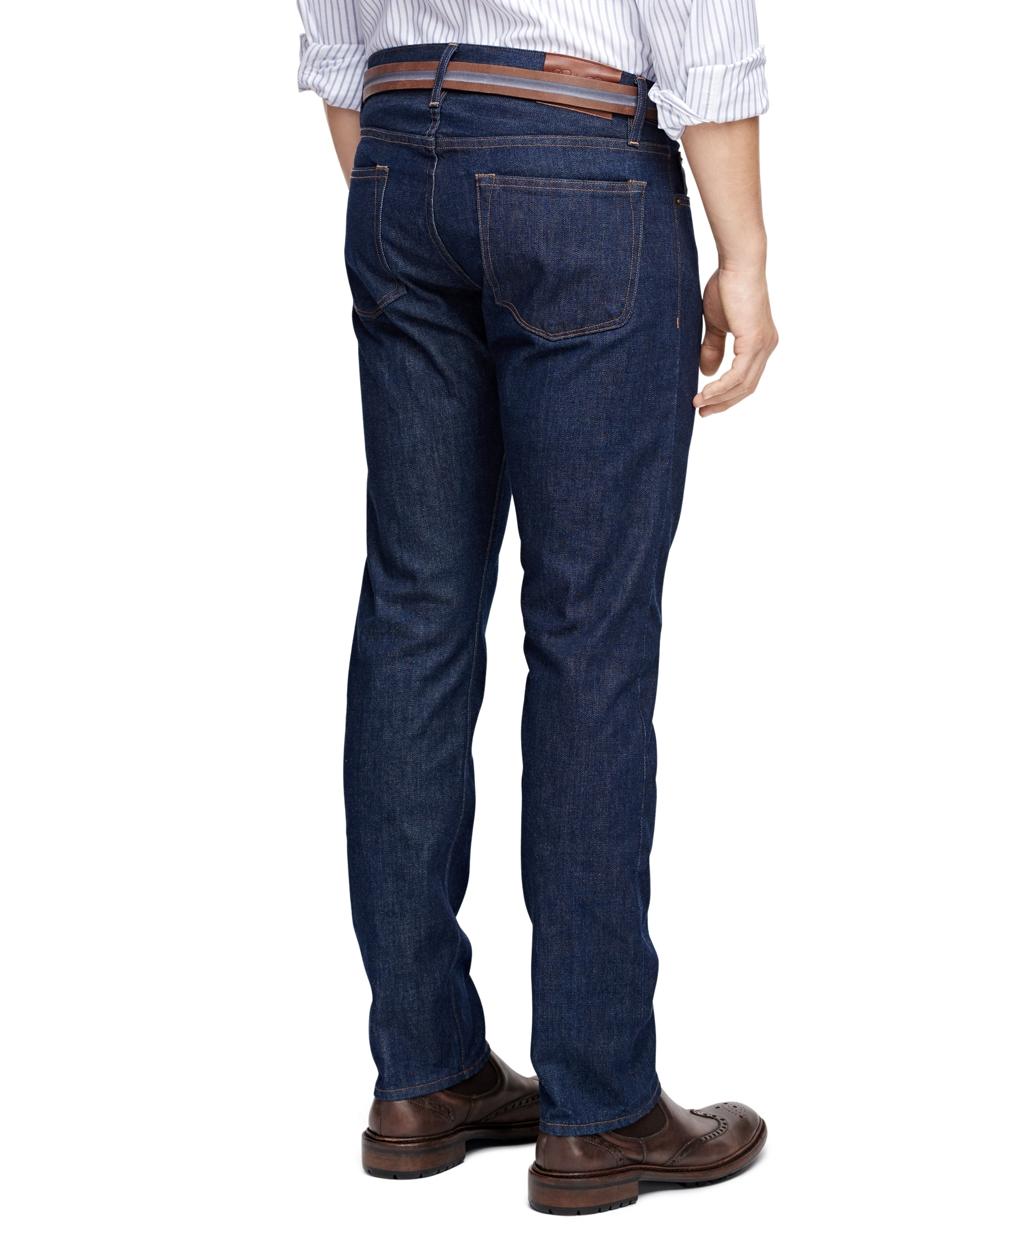 Lyst - Brooks Brothers Selvedge Denim Slim Fit Jeans in Blue for Men